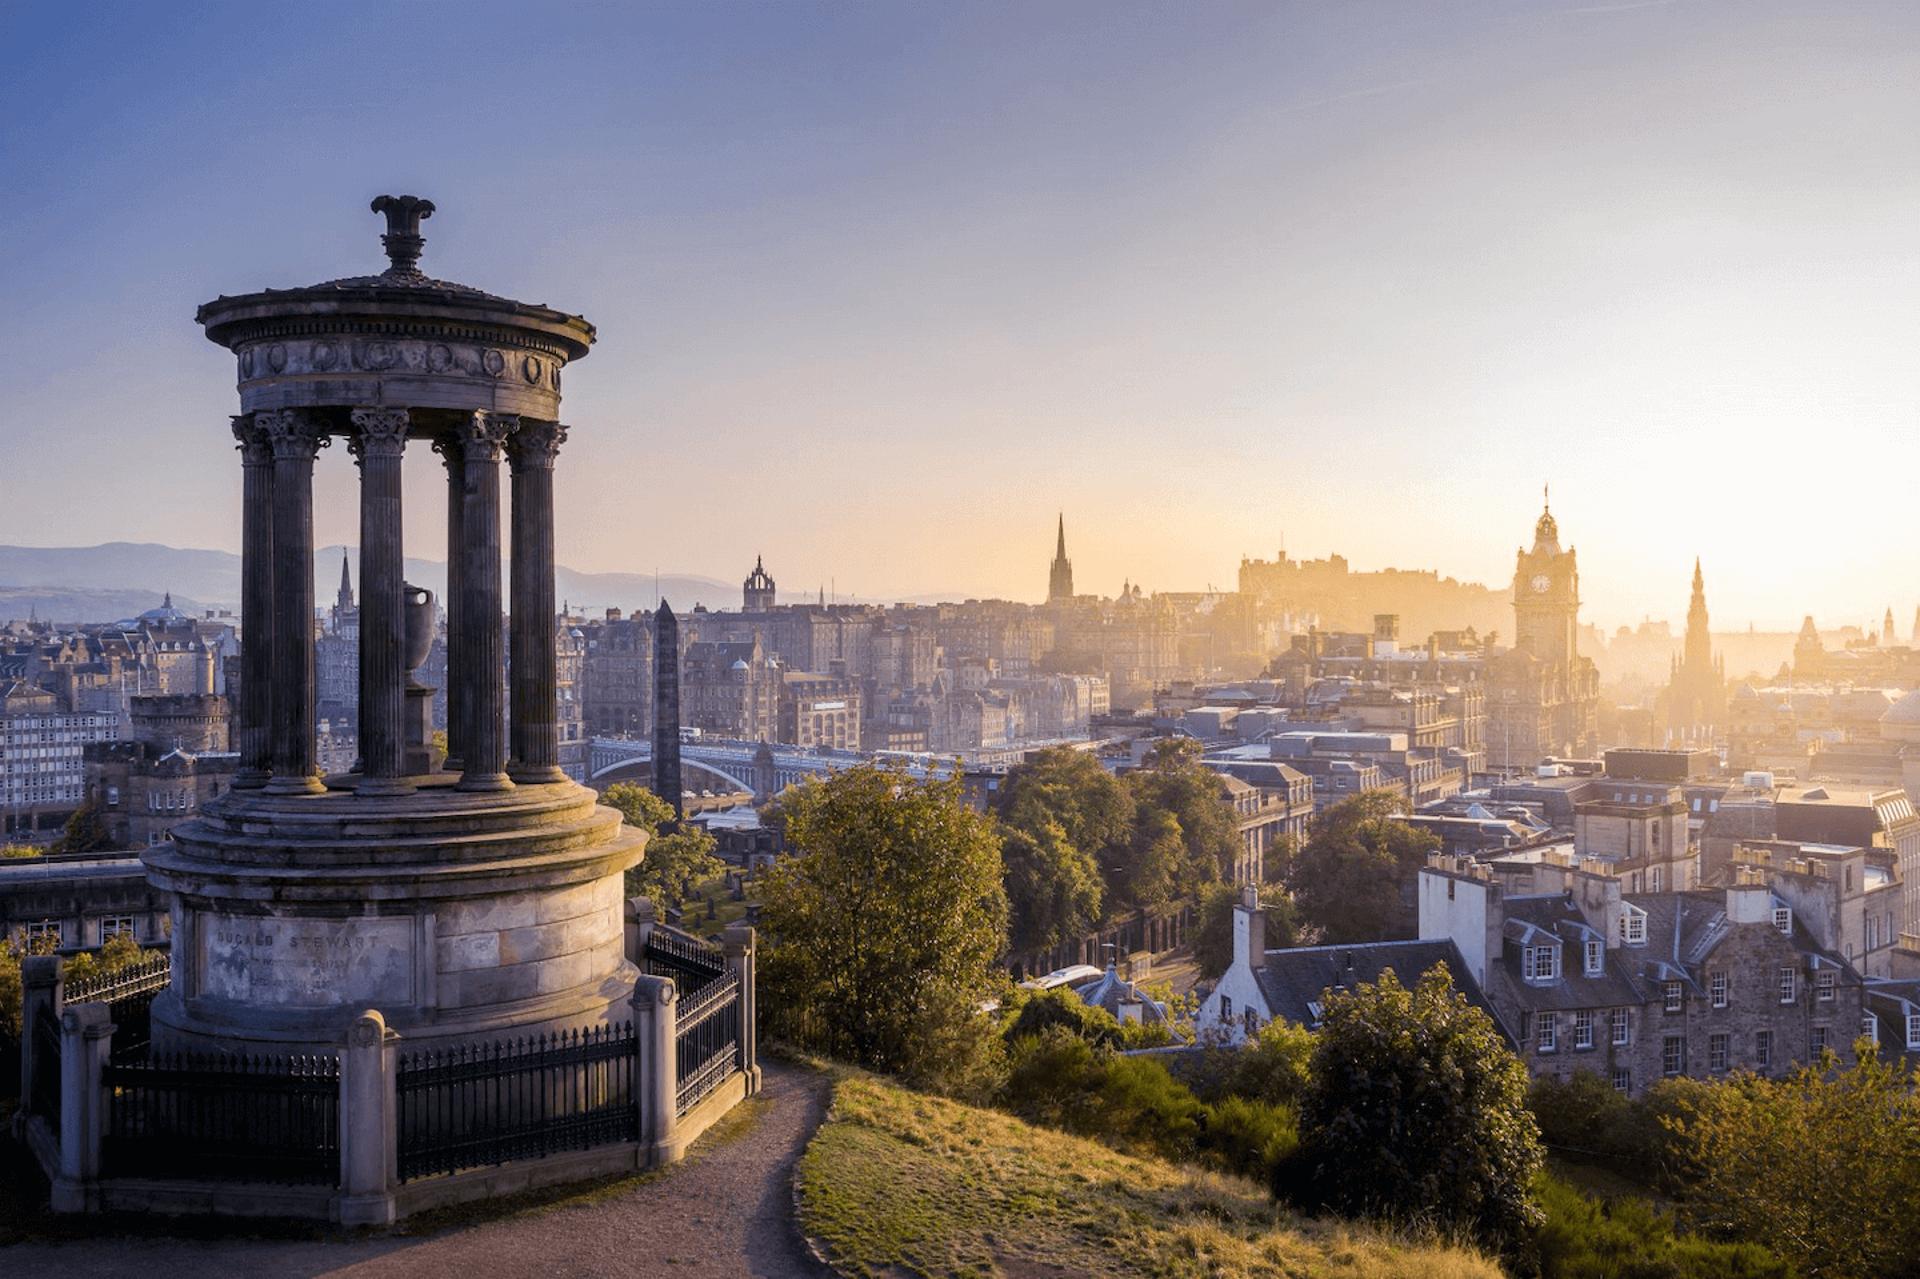 Edinburgh wealth management firms strike merger deal